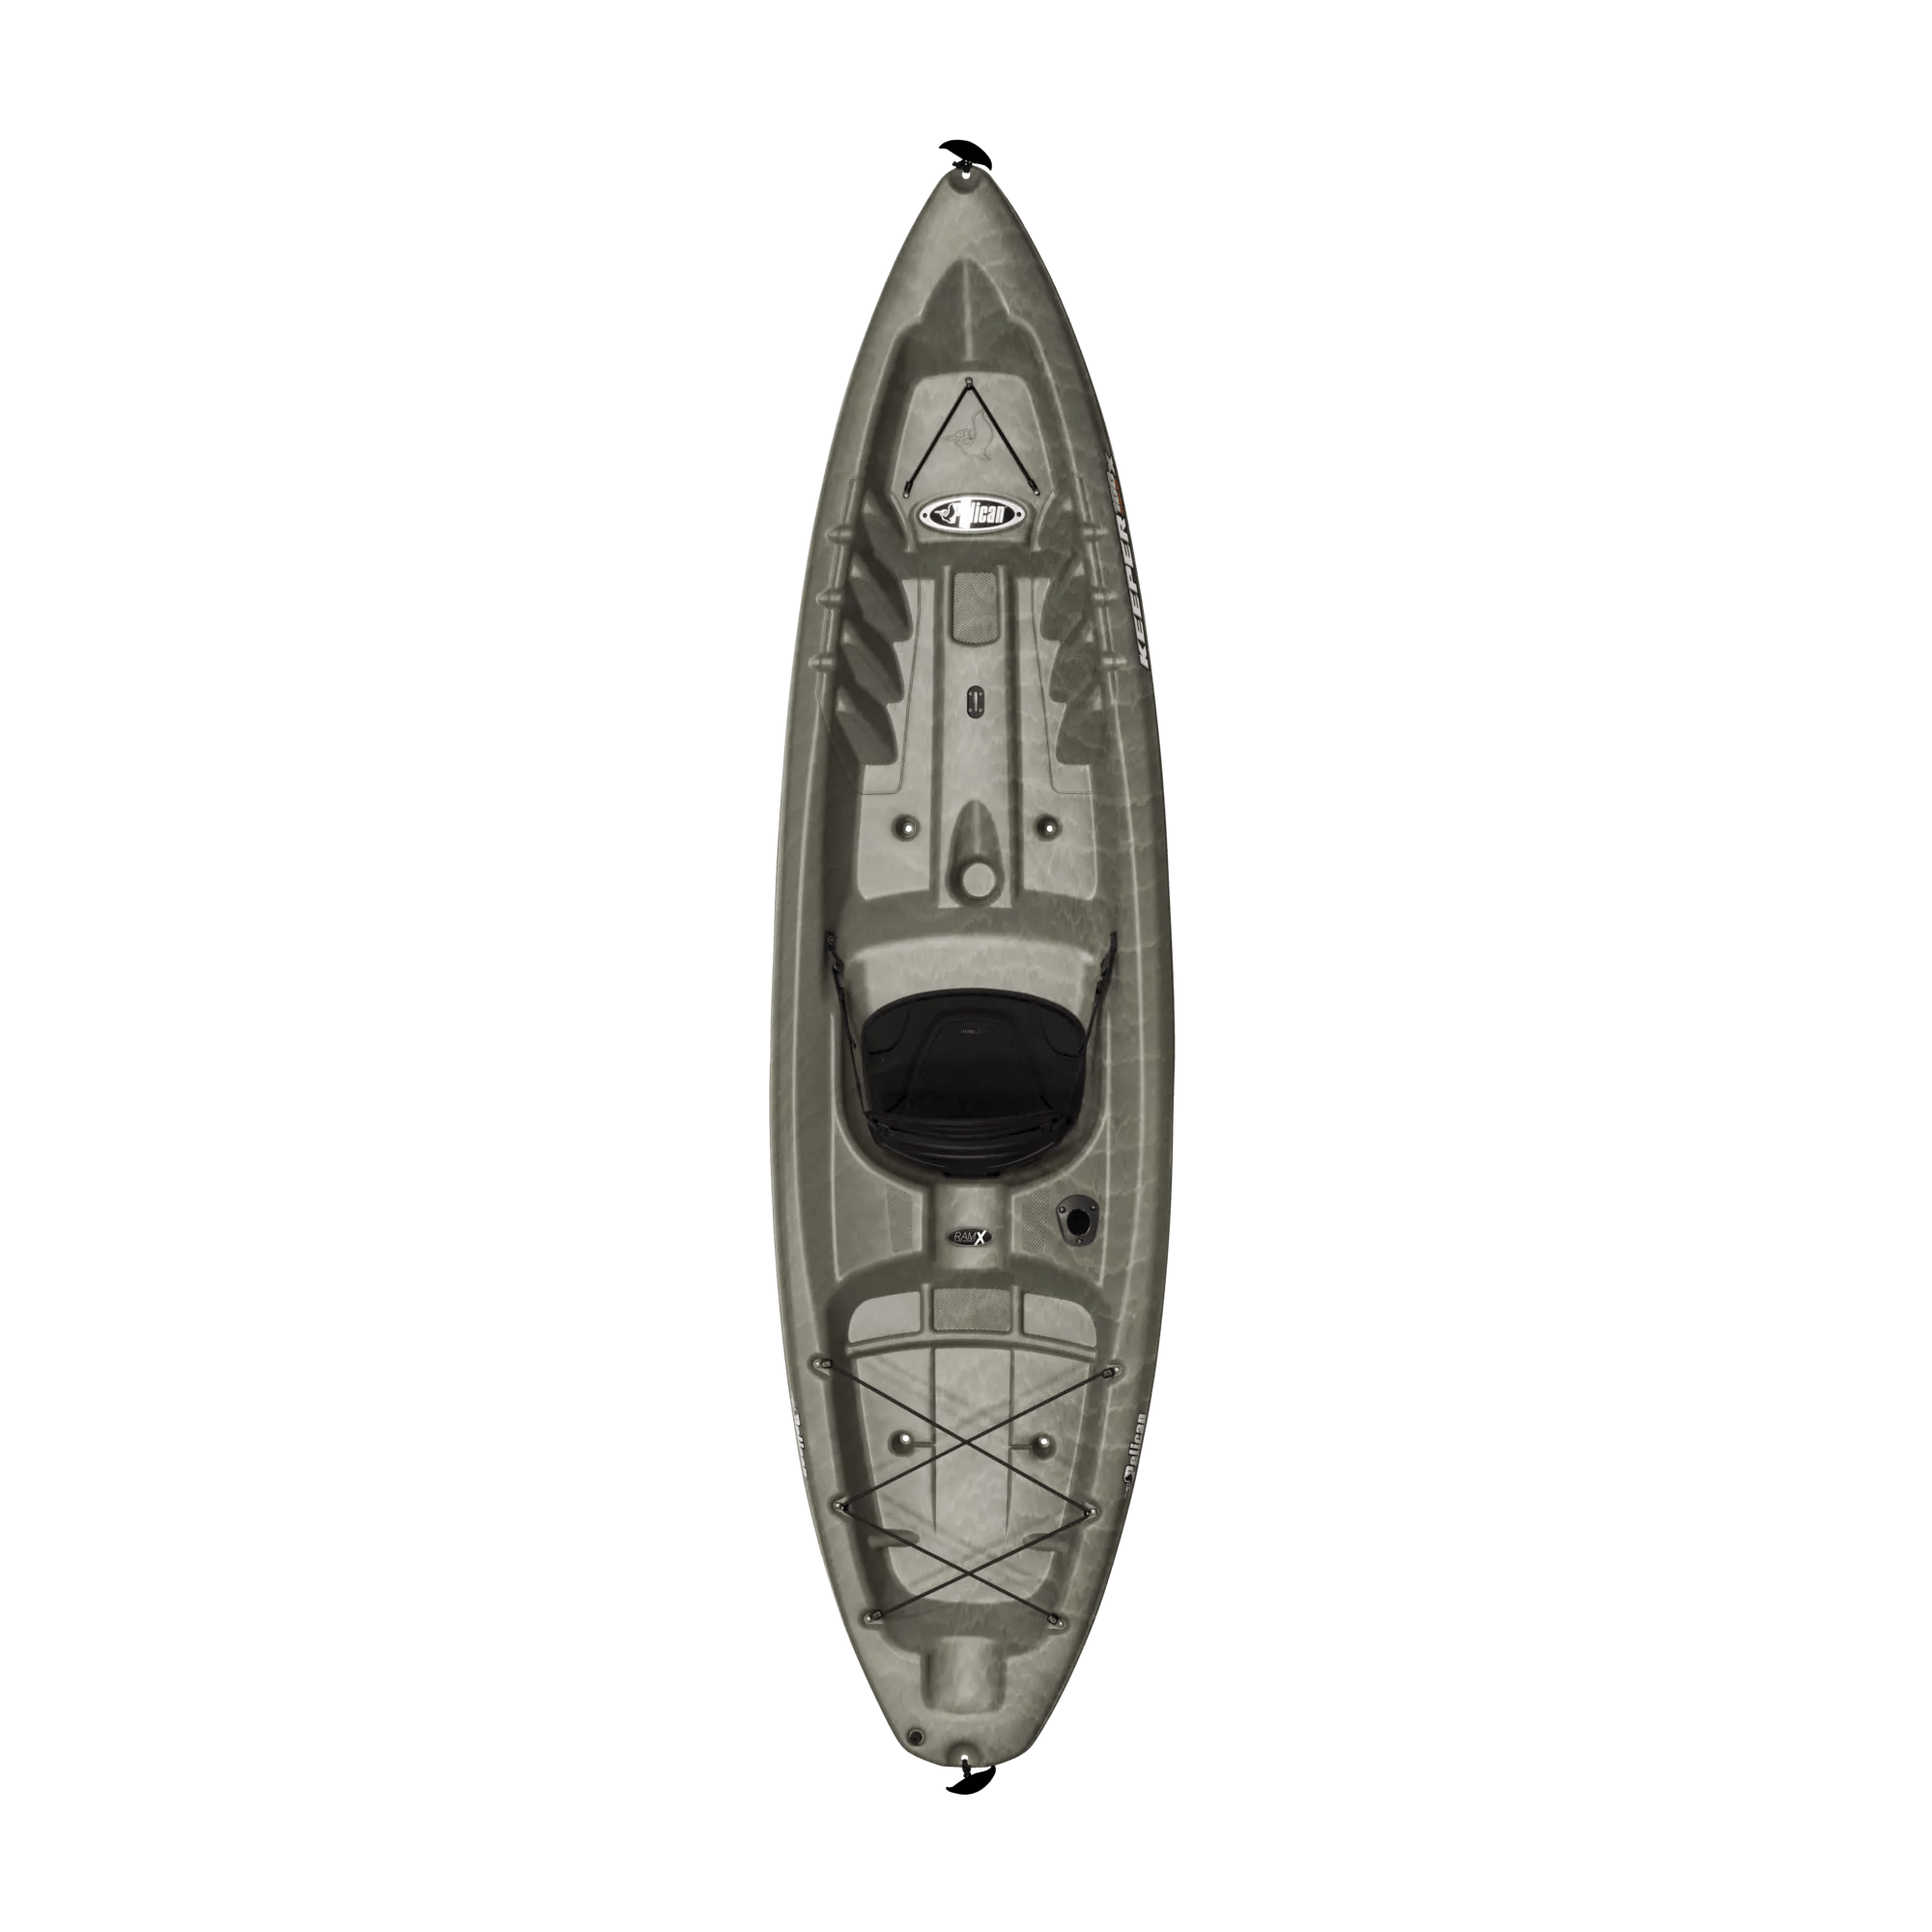 PELICAN - Keeper 100X Angler Fishing Kayak - Discontinued color/model - Beige - KVF10P170 - TOP 